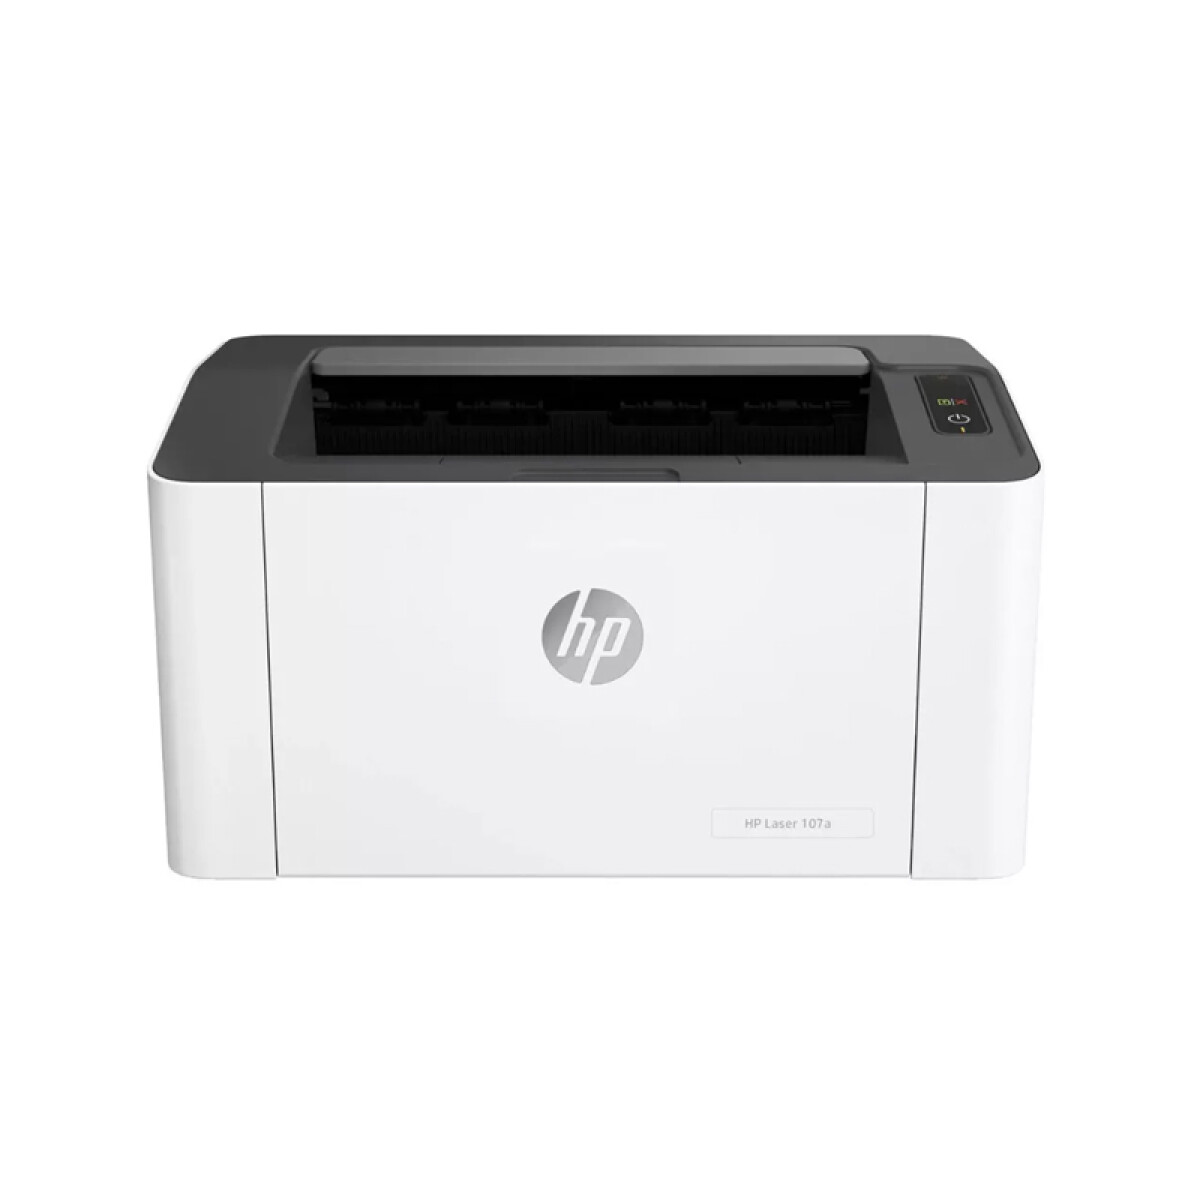 Impresora HP laser wifi 107W mono c/toner - Unica 